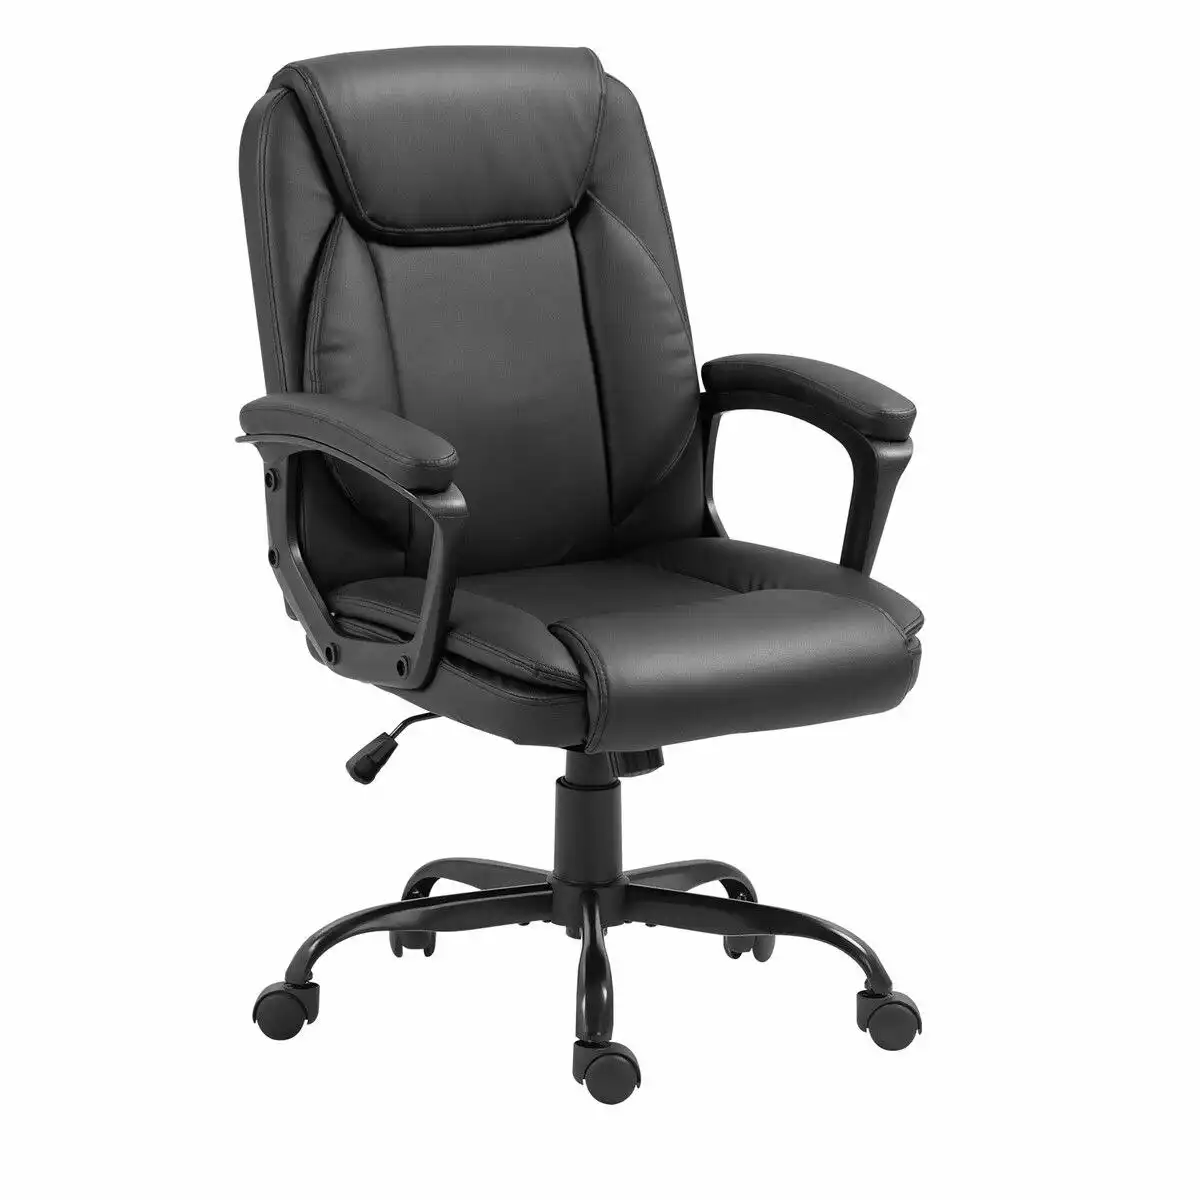 Neader Ergonomic Office Chair Computer Study Executive Desk Armchair Home Work Reclining Adjustable Swivel Recliner PU Black